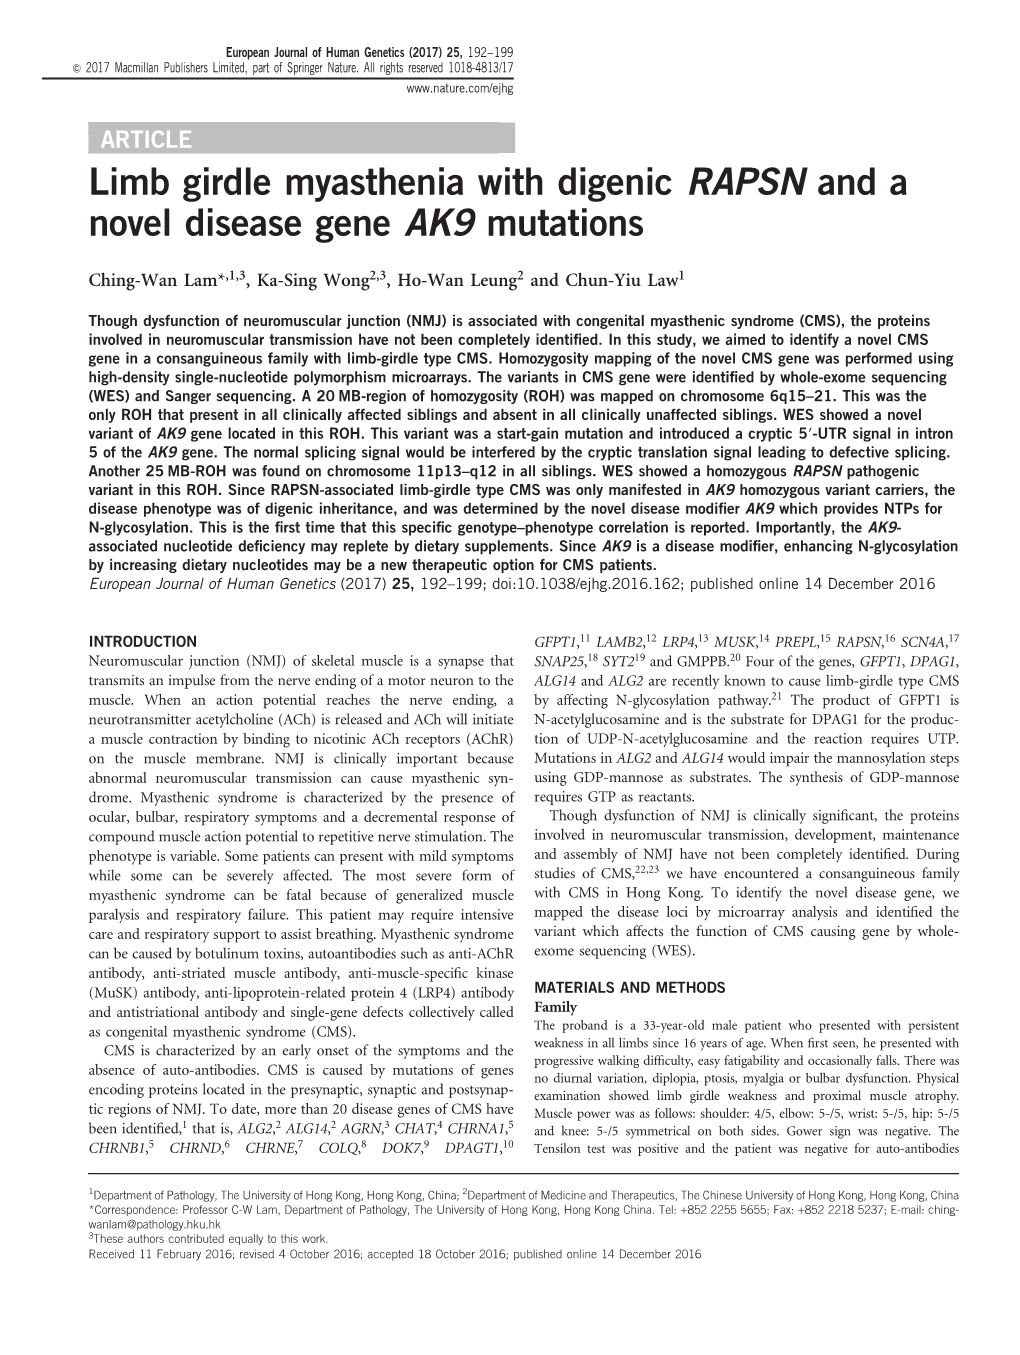 Limb Girdle Myasthenia with Digenic RAPSN and a Novel Disease Gene AK9 Mutations